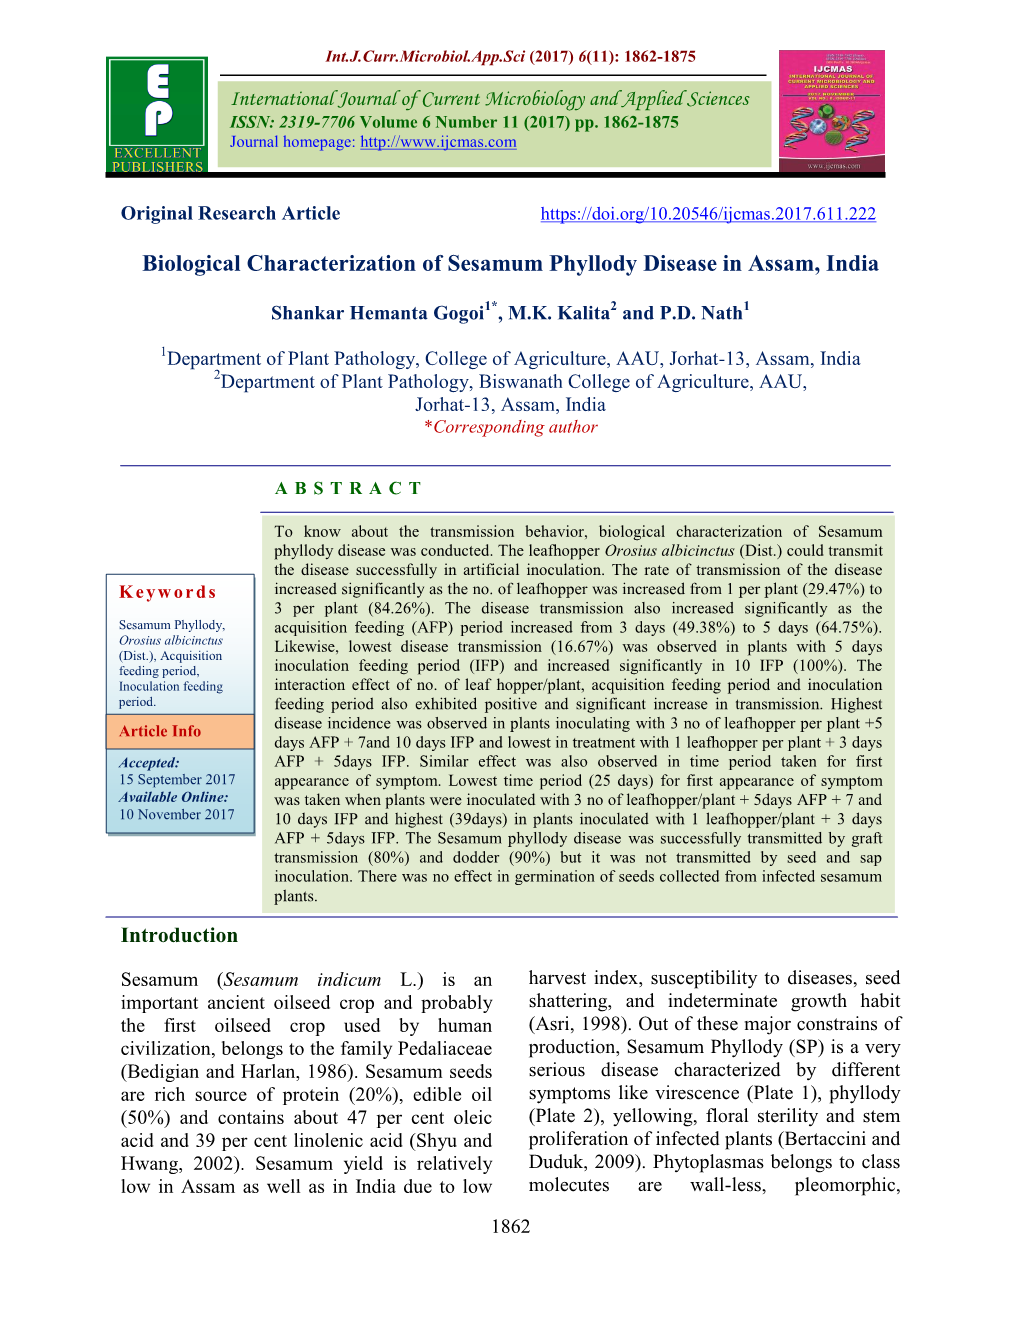 Biological Characterization of Sesamum Phyllody Disease in Assam, India